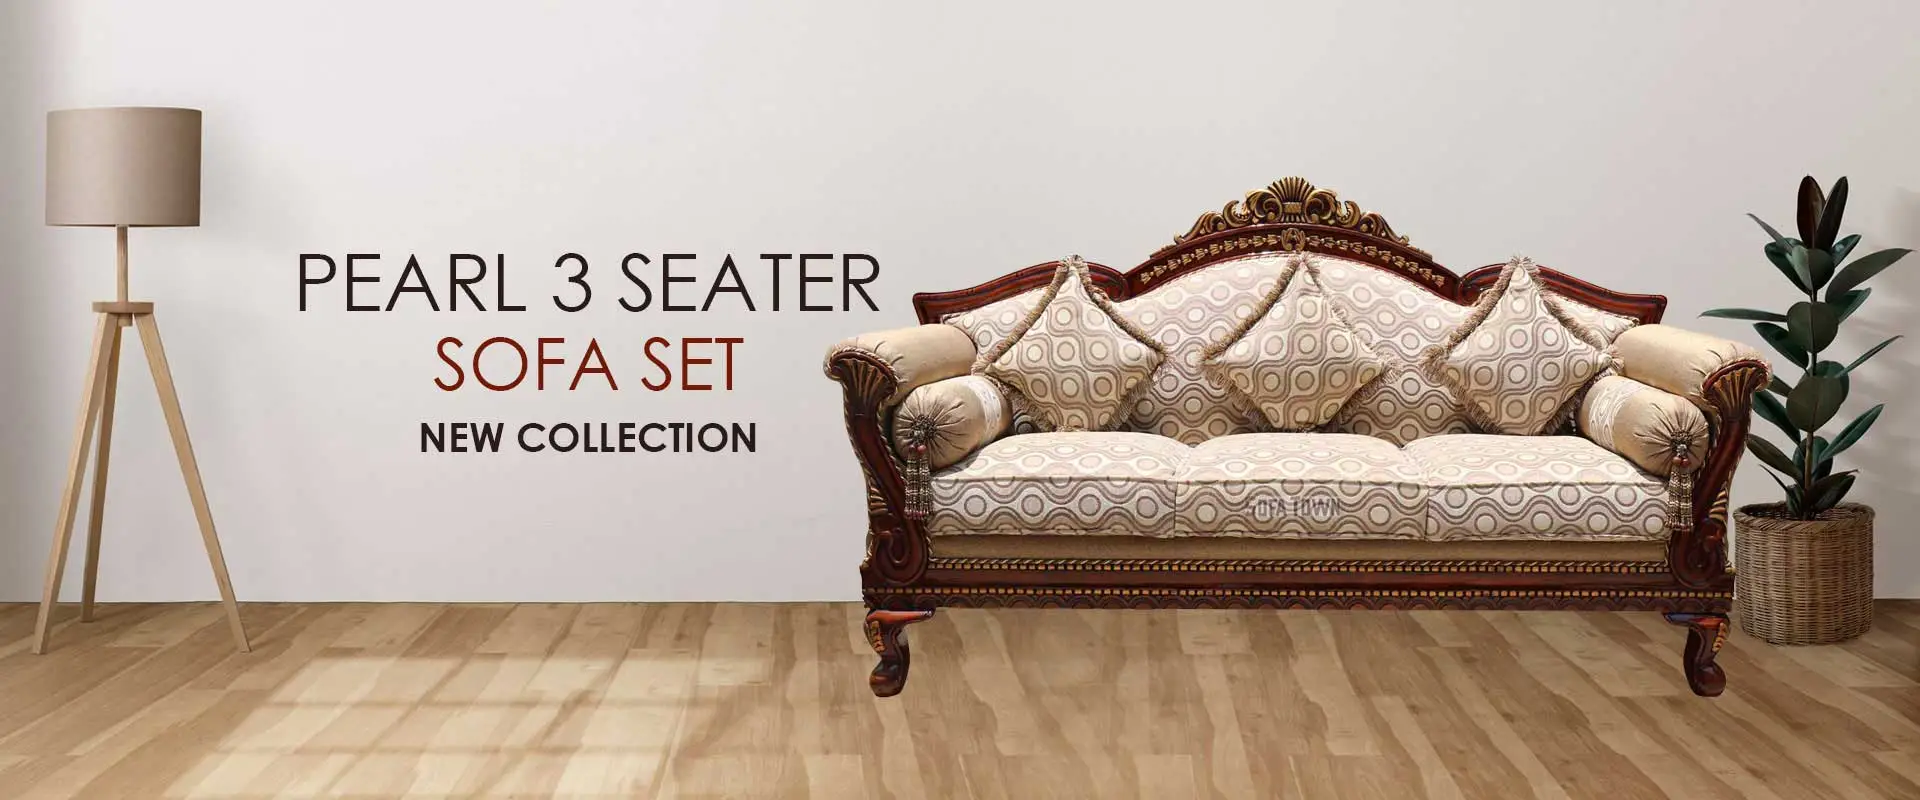 Pearl 3 Seater Sofa Set  Manufacturers in Sangrur